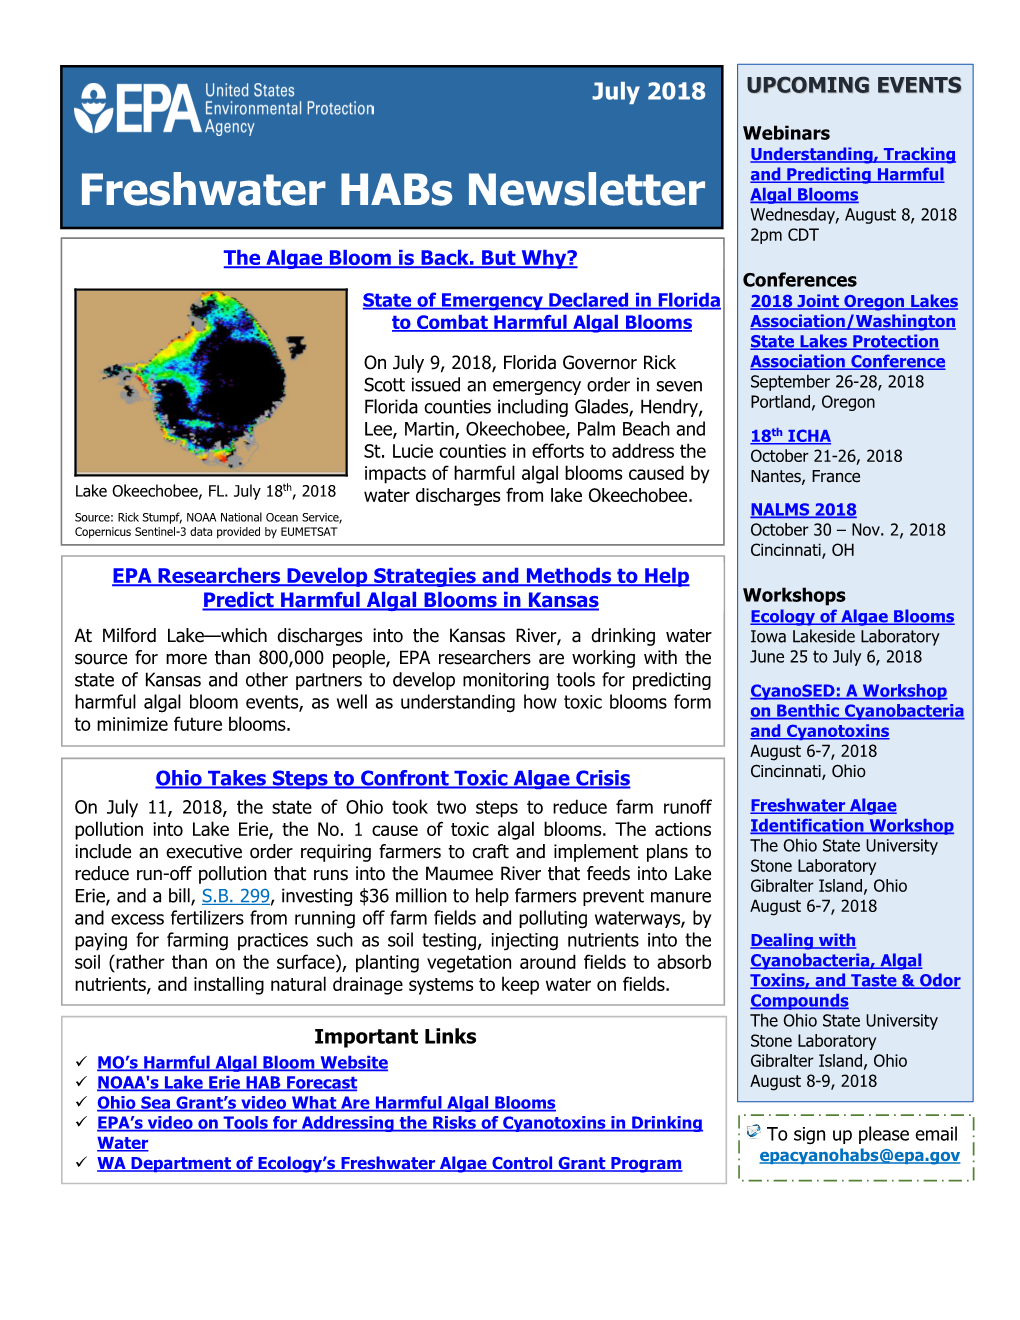 Freshwater Habs Newsletter Wednesday, August 8, 2018 2Pm CDT the Algae Bloom Is Back